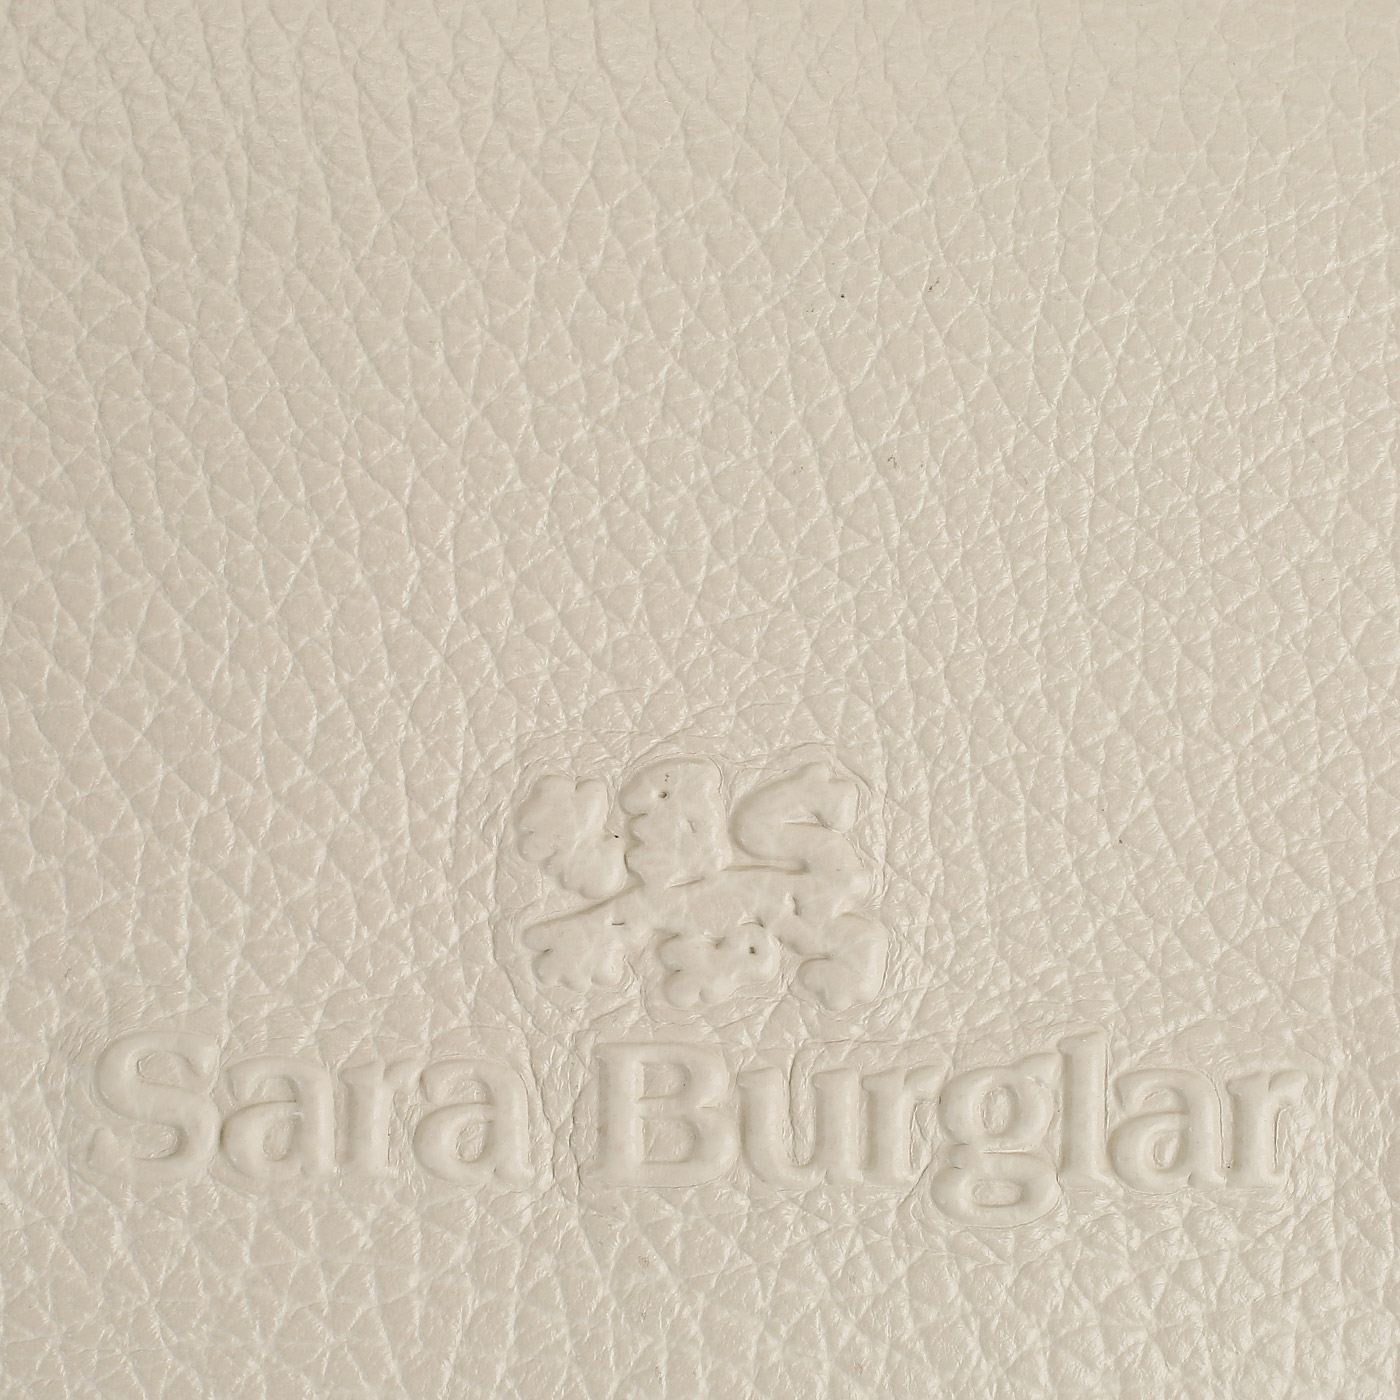 Сумка-мессенджер Sara Burglar Lia Qerida Logo